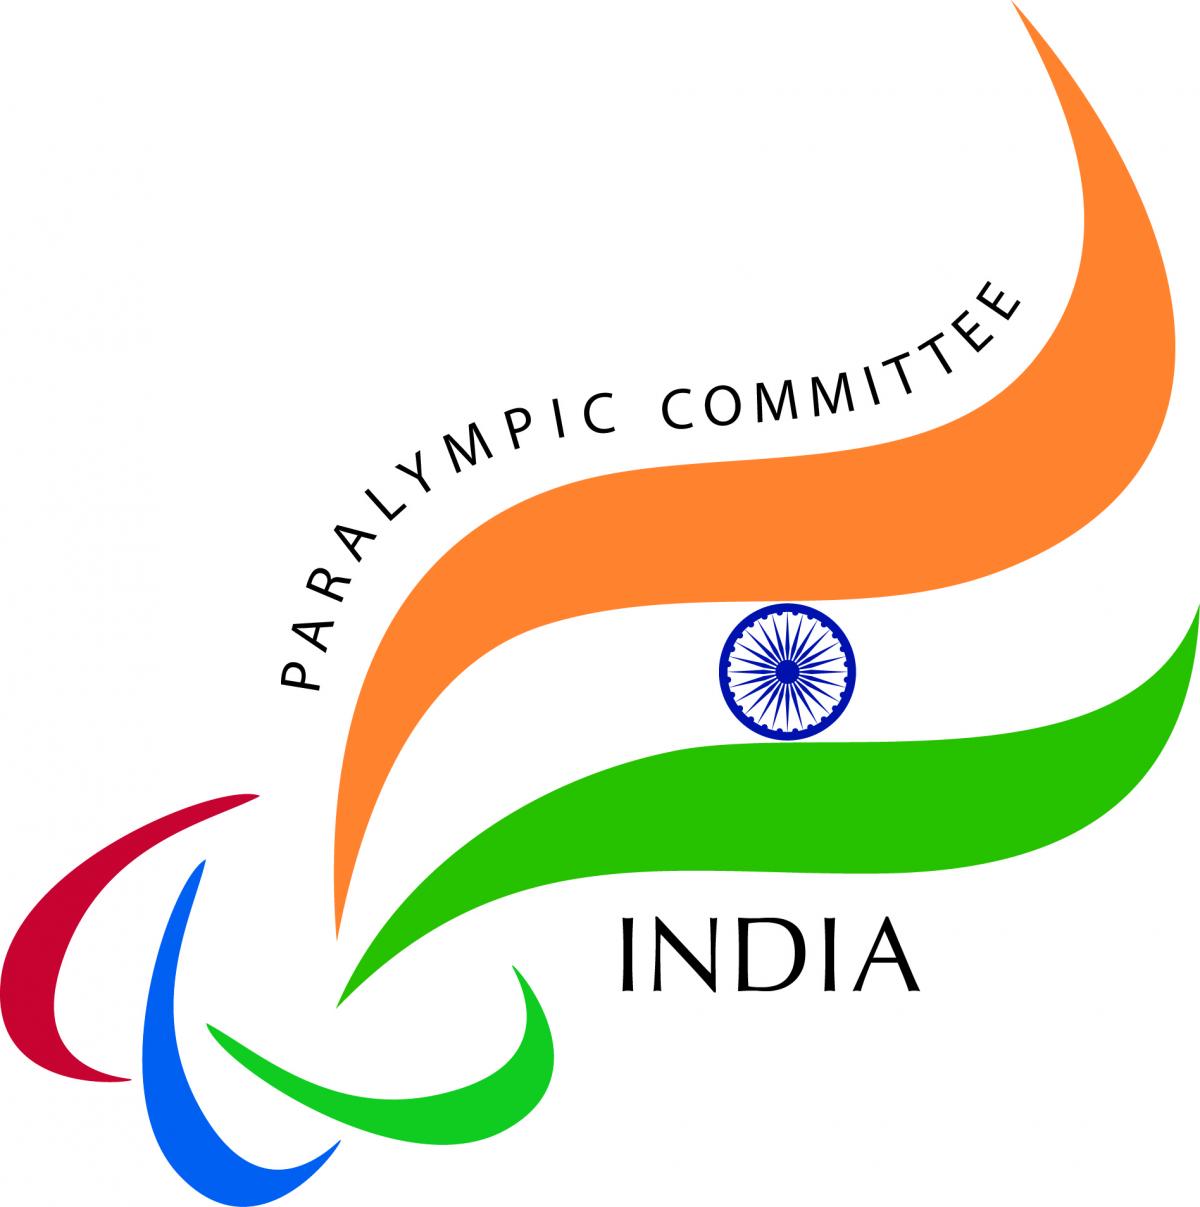 NPC India logo